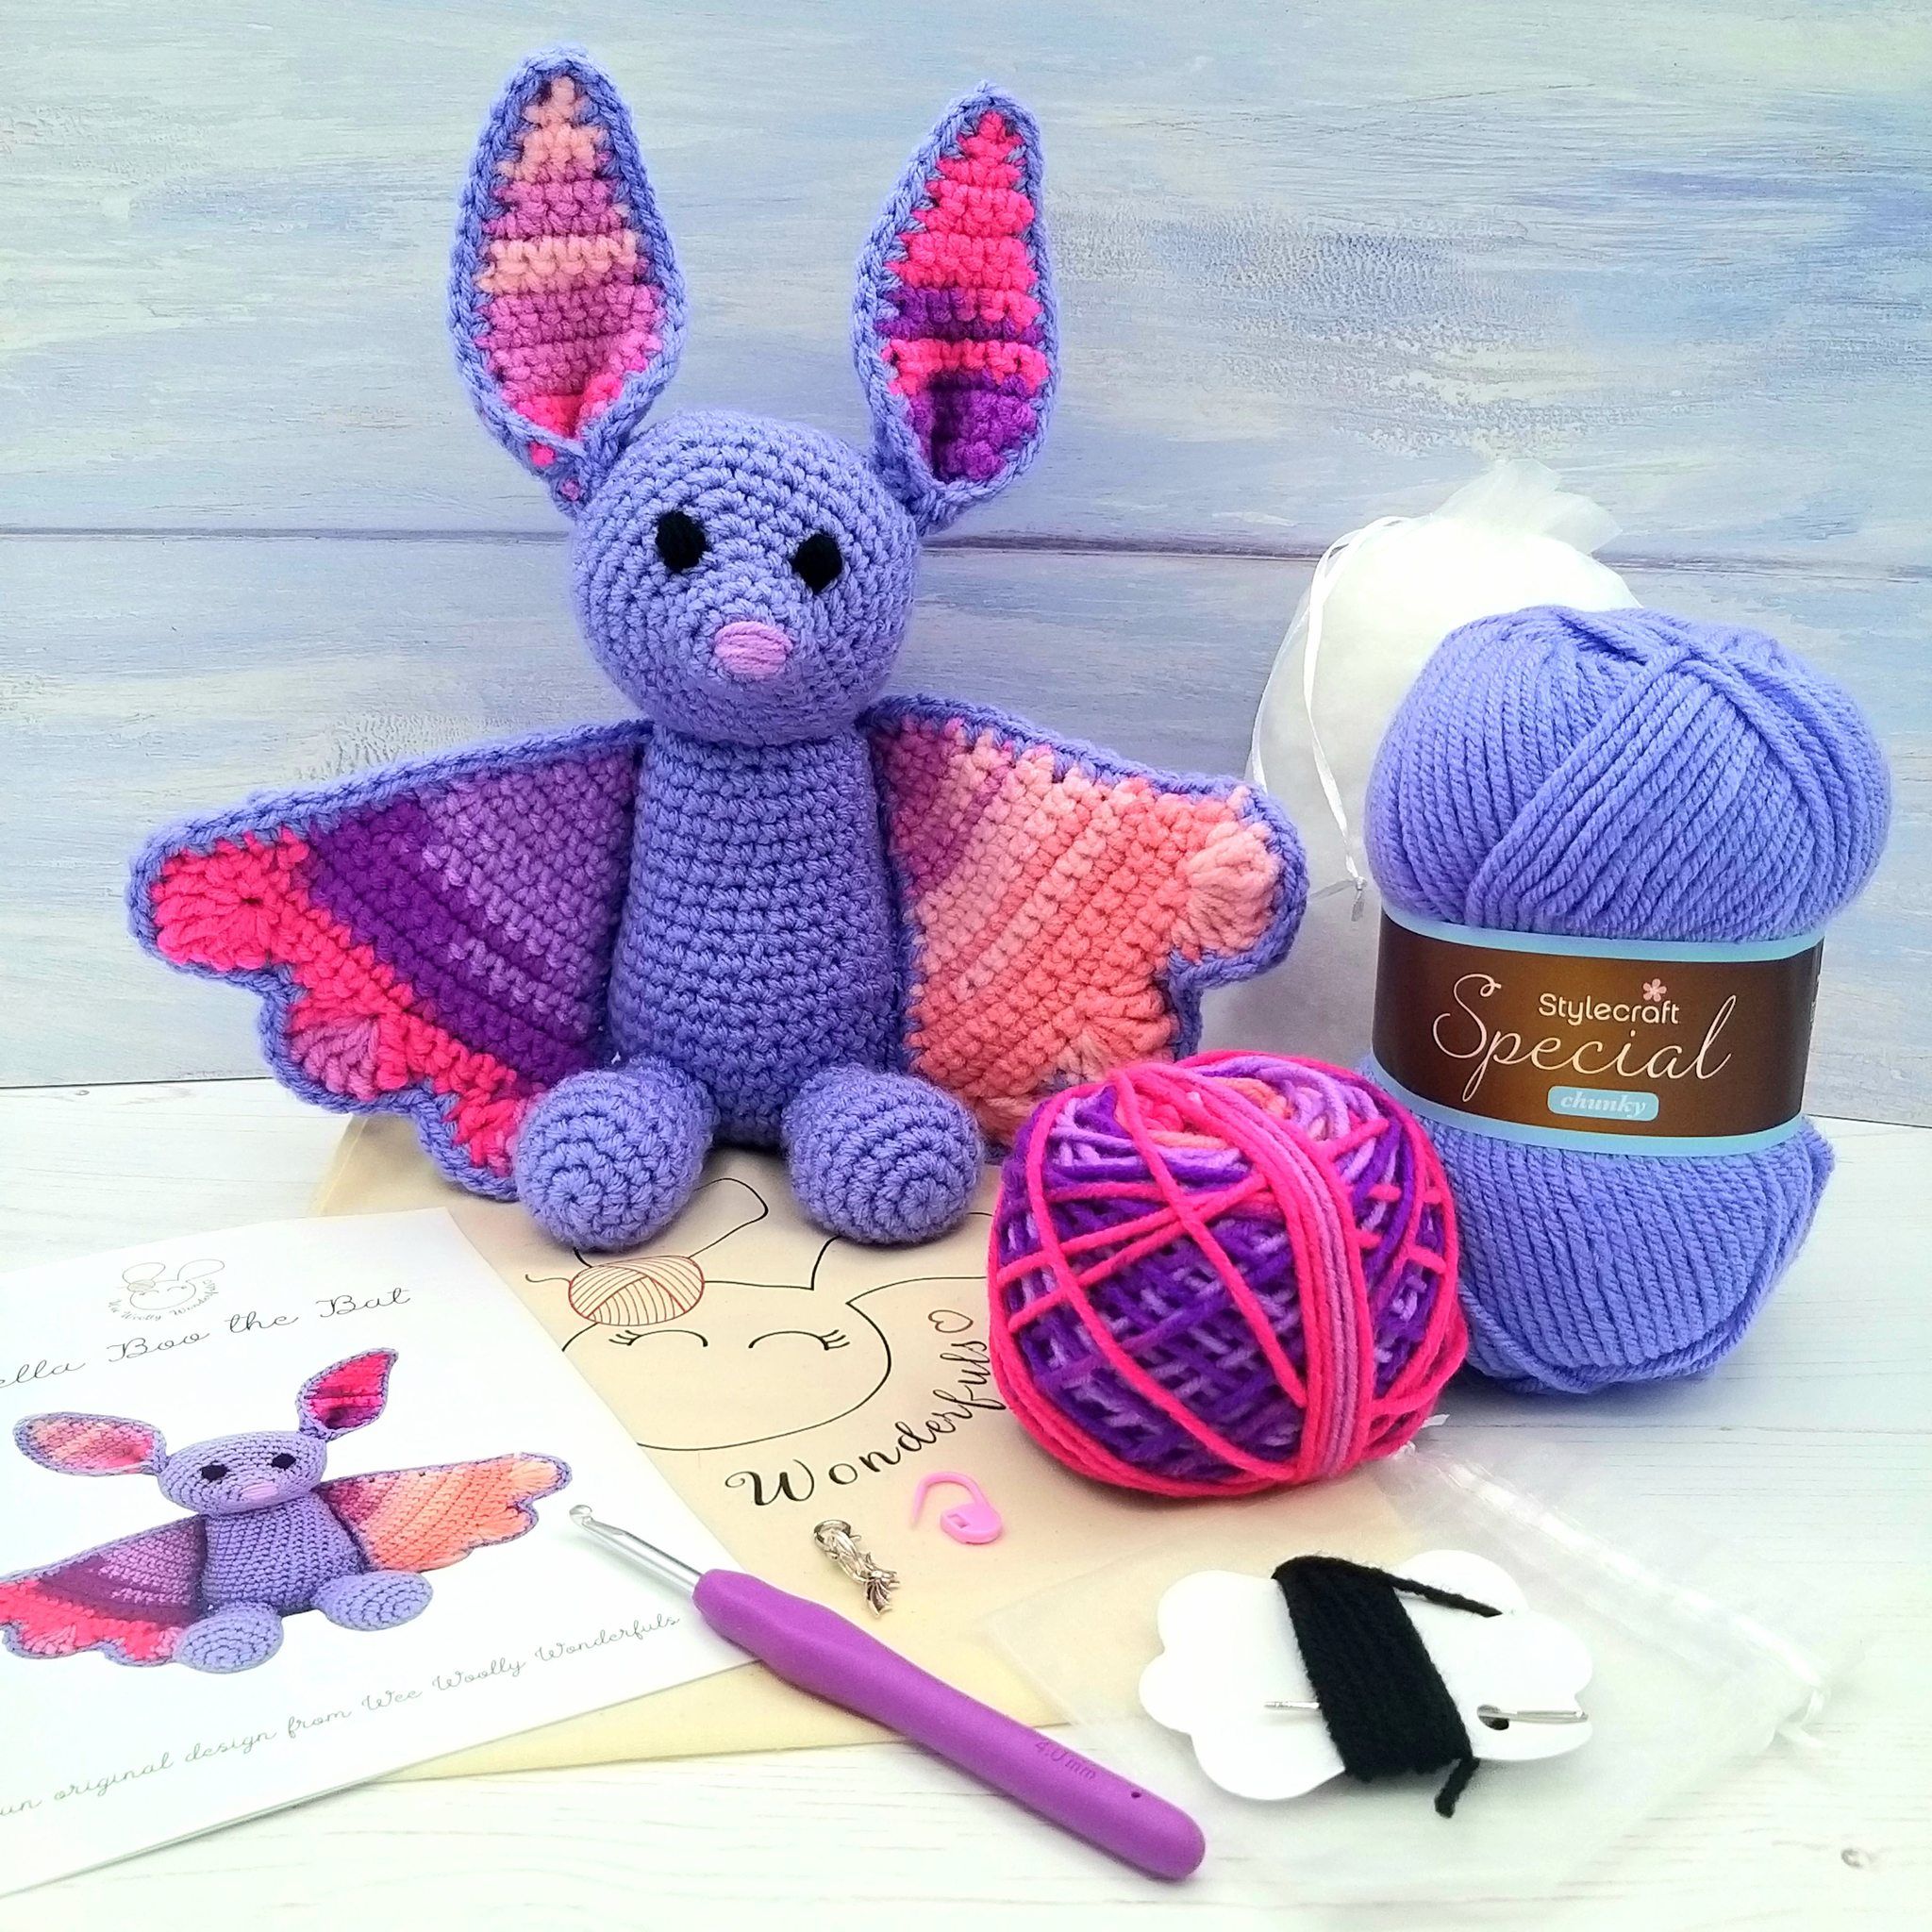 Animal knitting tutorial. bonnet knitting pattern Newborn bonnet pattern Bat toy